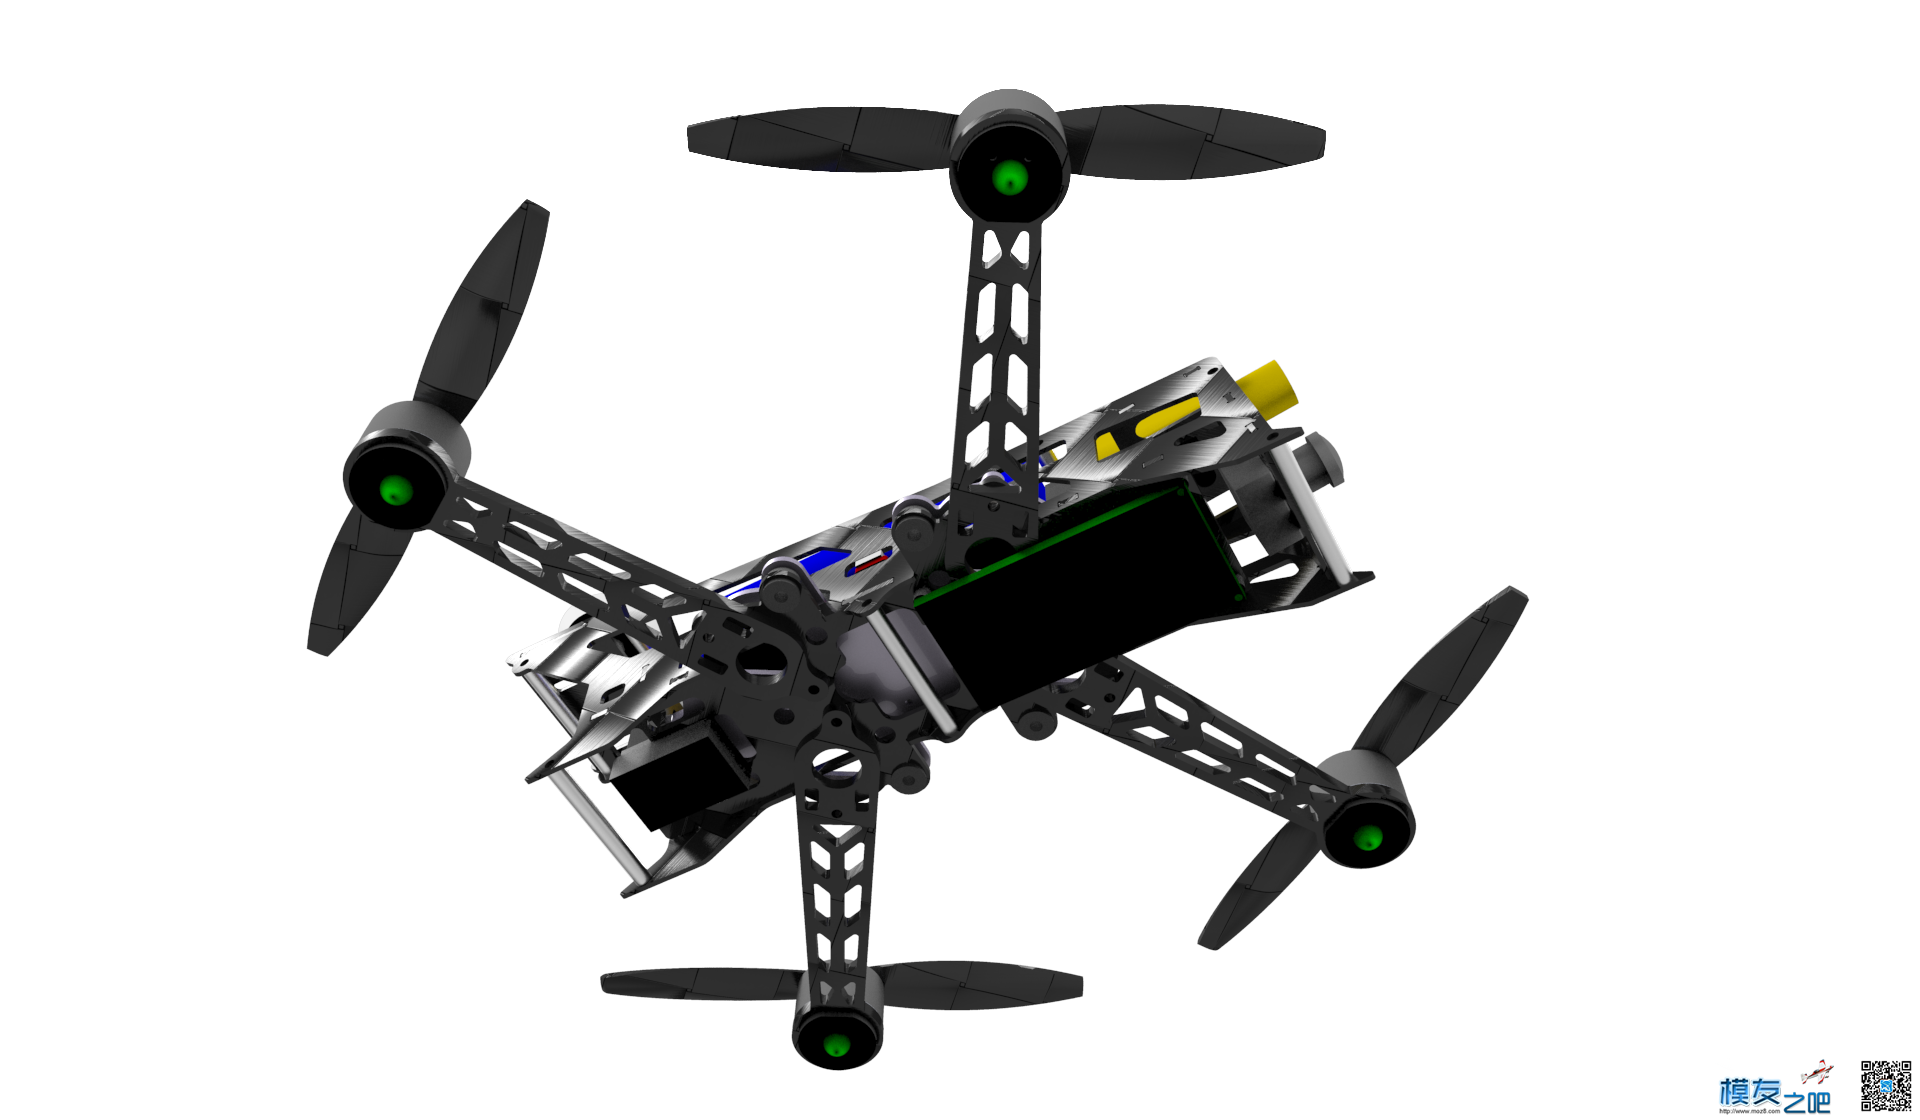 AlienCopter 穿越者V 新品首发 穿越机,多旋翼,电池,天线,图传 作者:xiaoxuexue11111 5319 